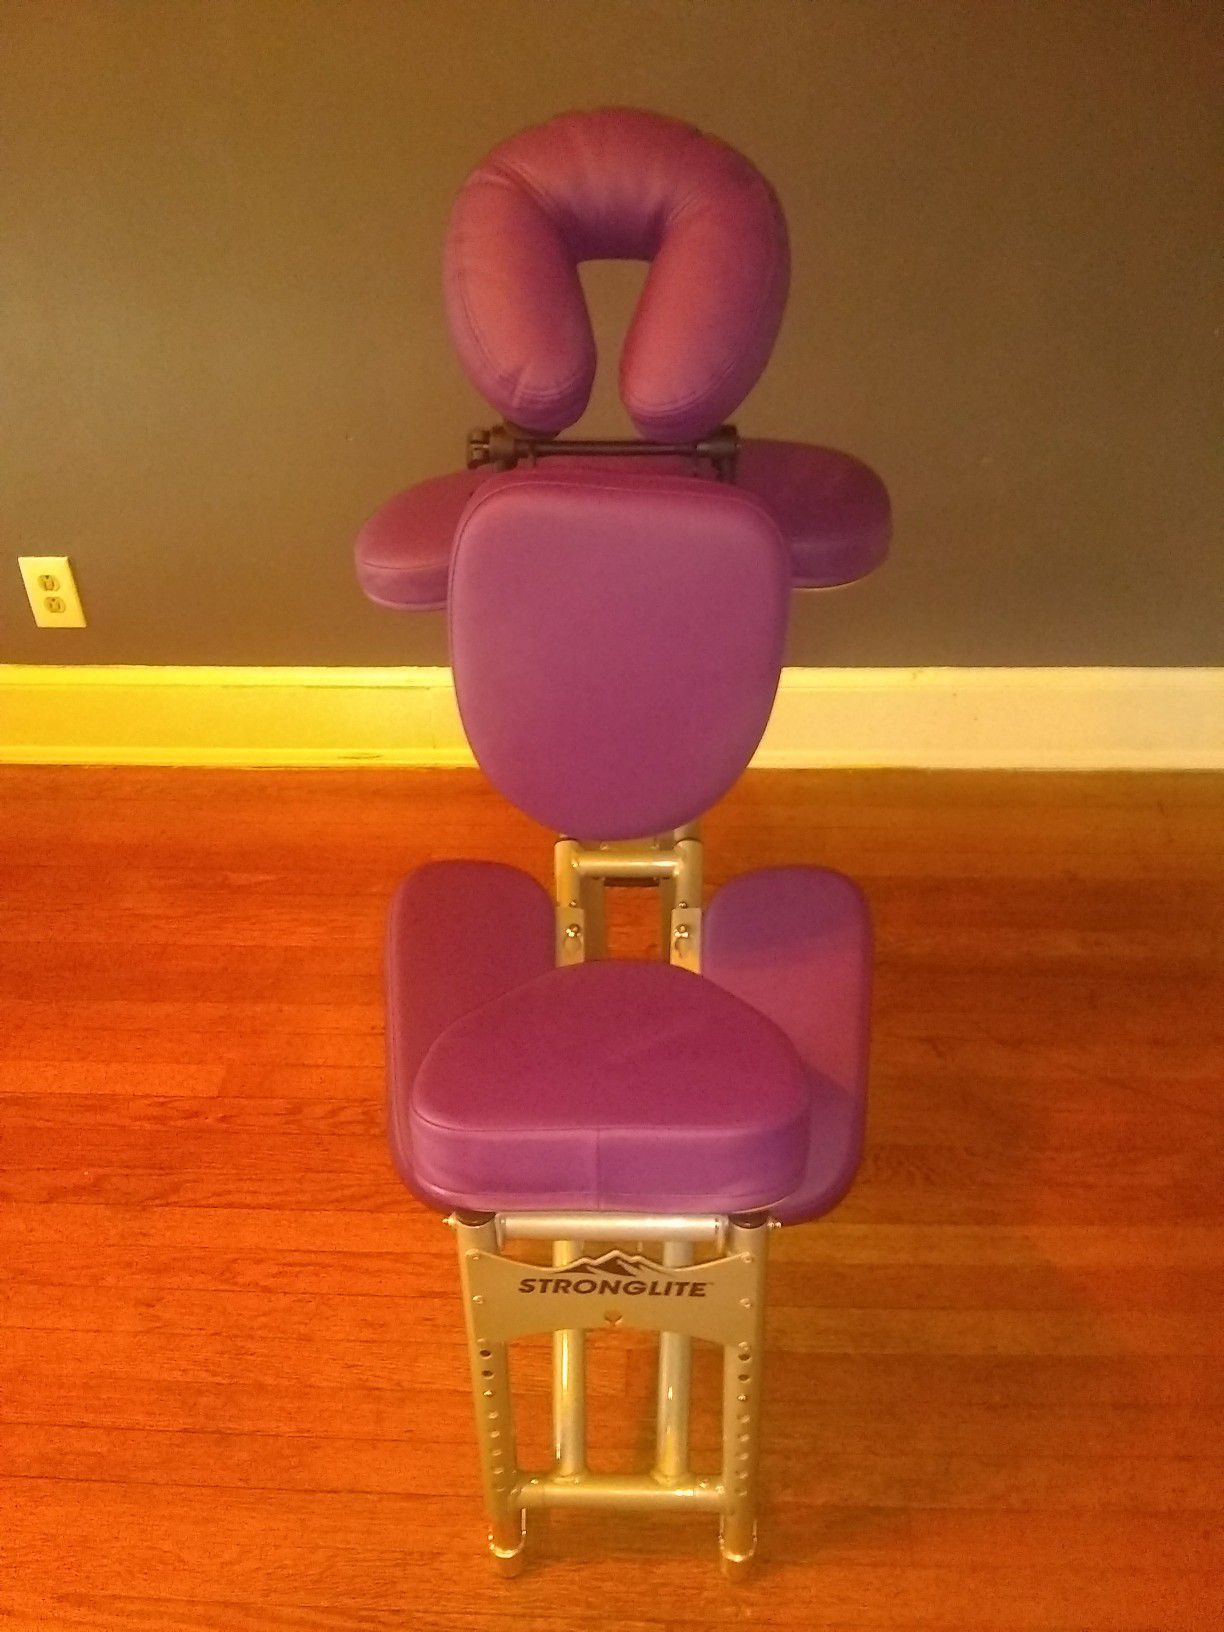 Stronglite Ergo Portable Massage Chair